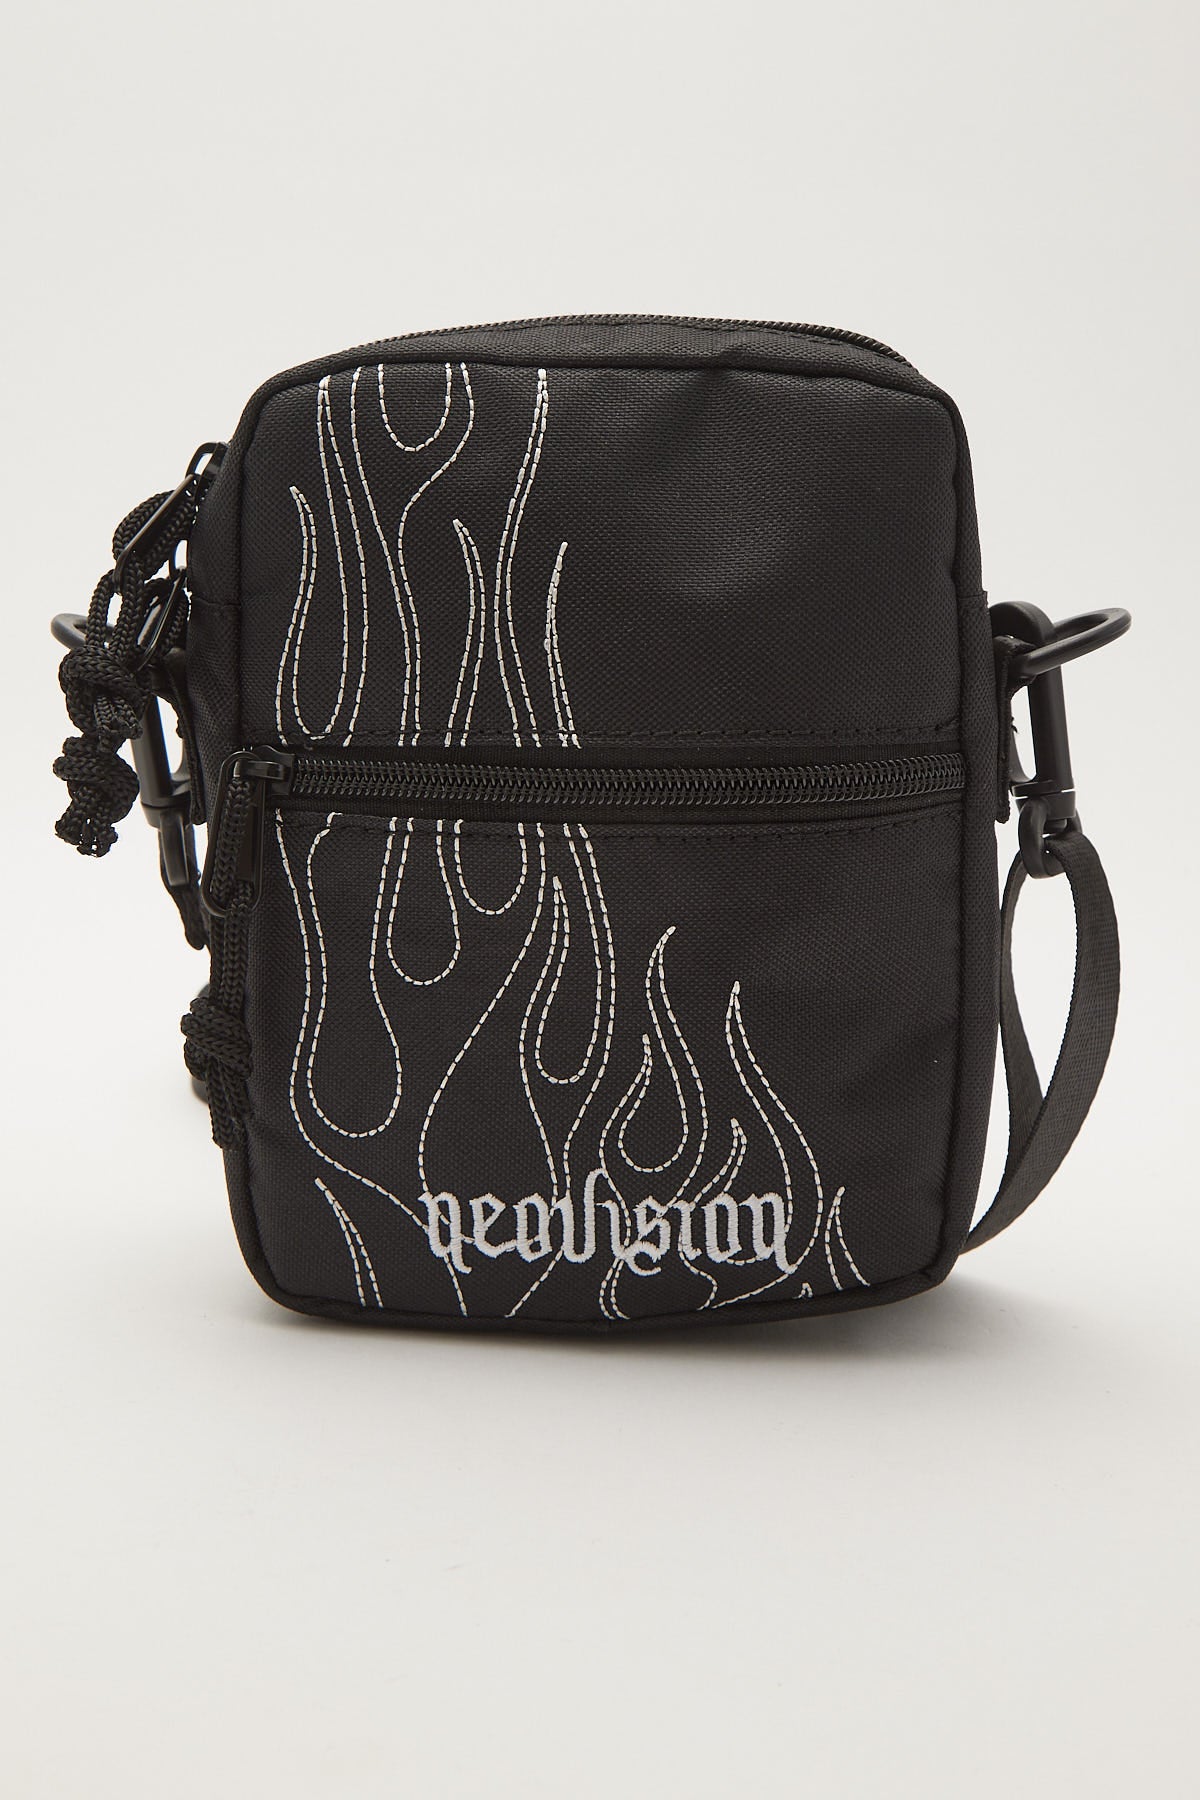 Neovision Flames Crossbody Bag Black